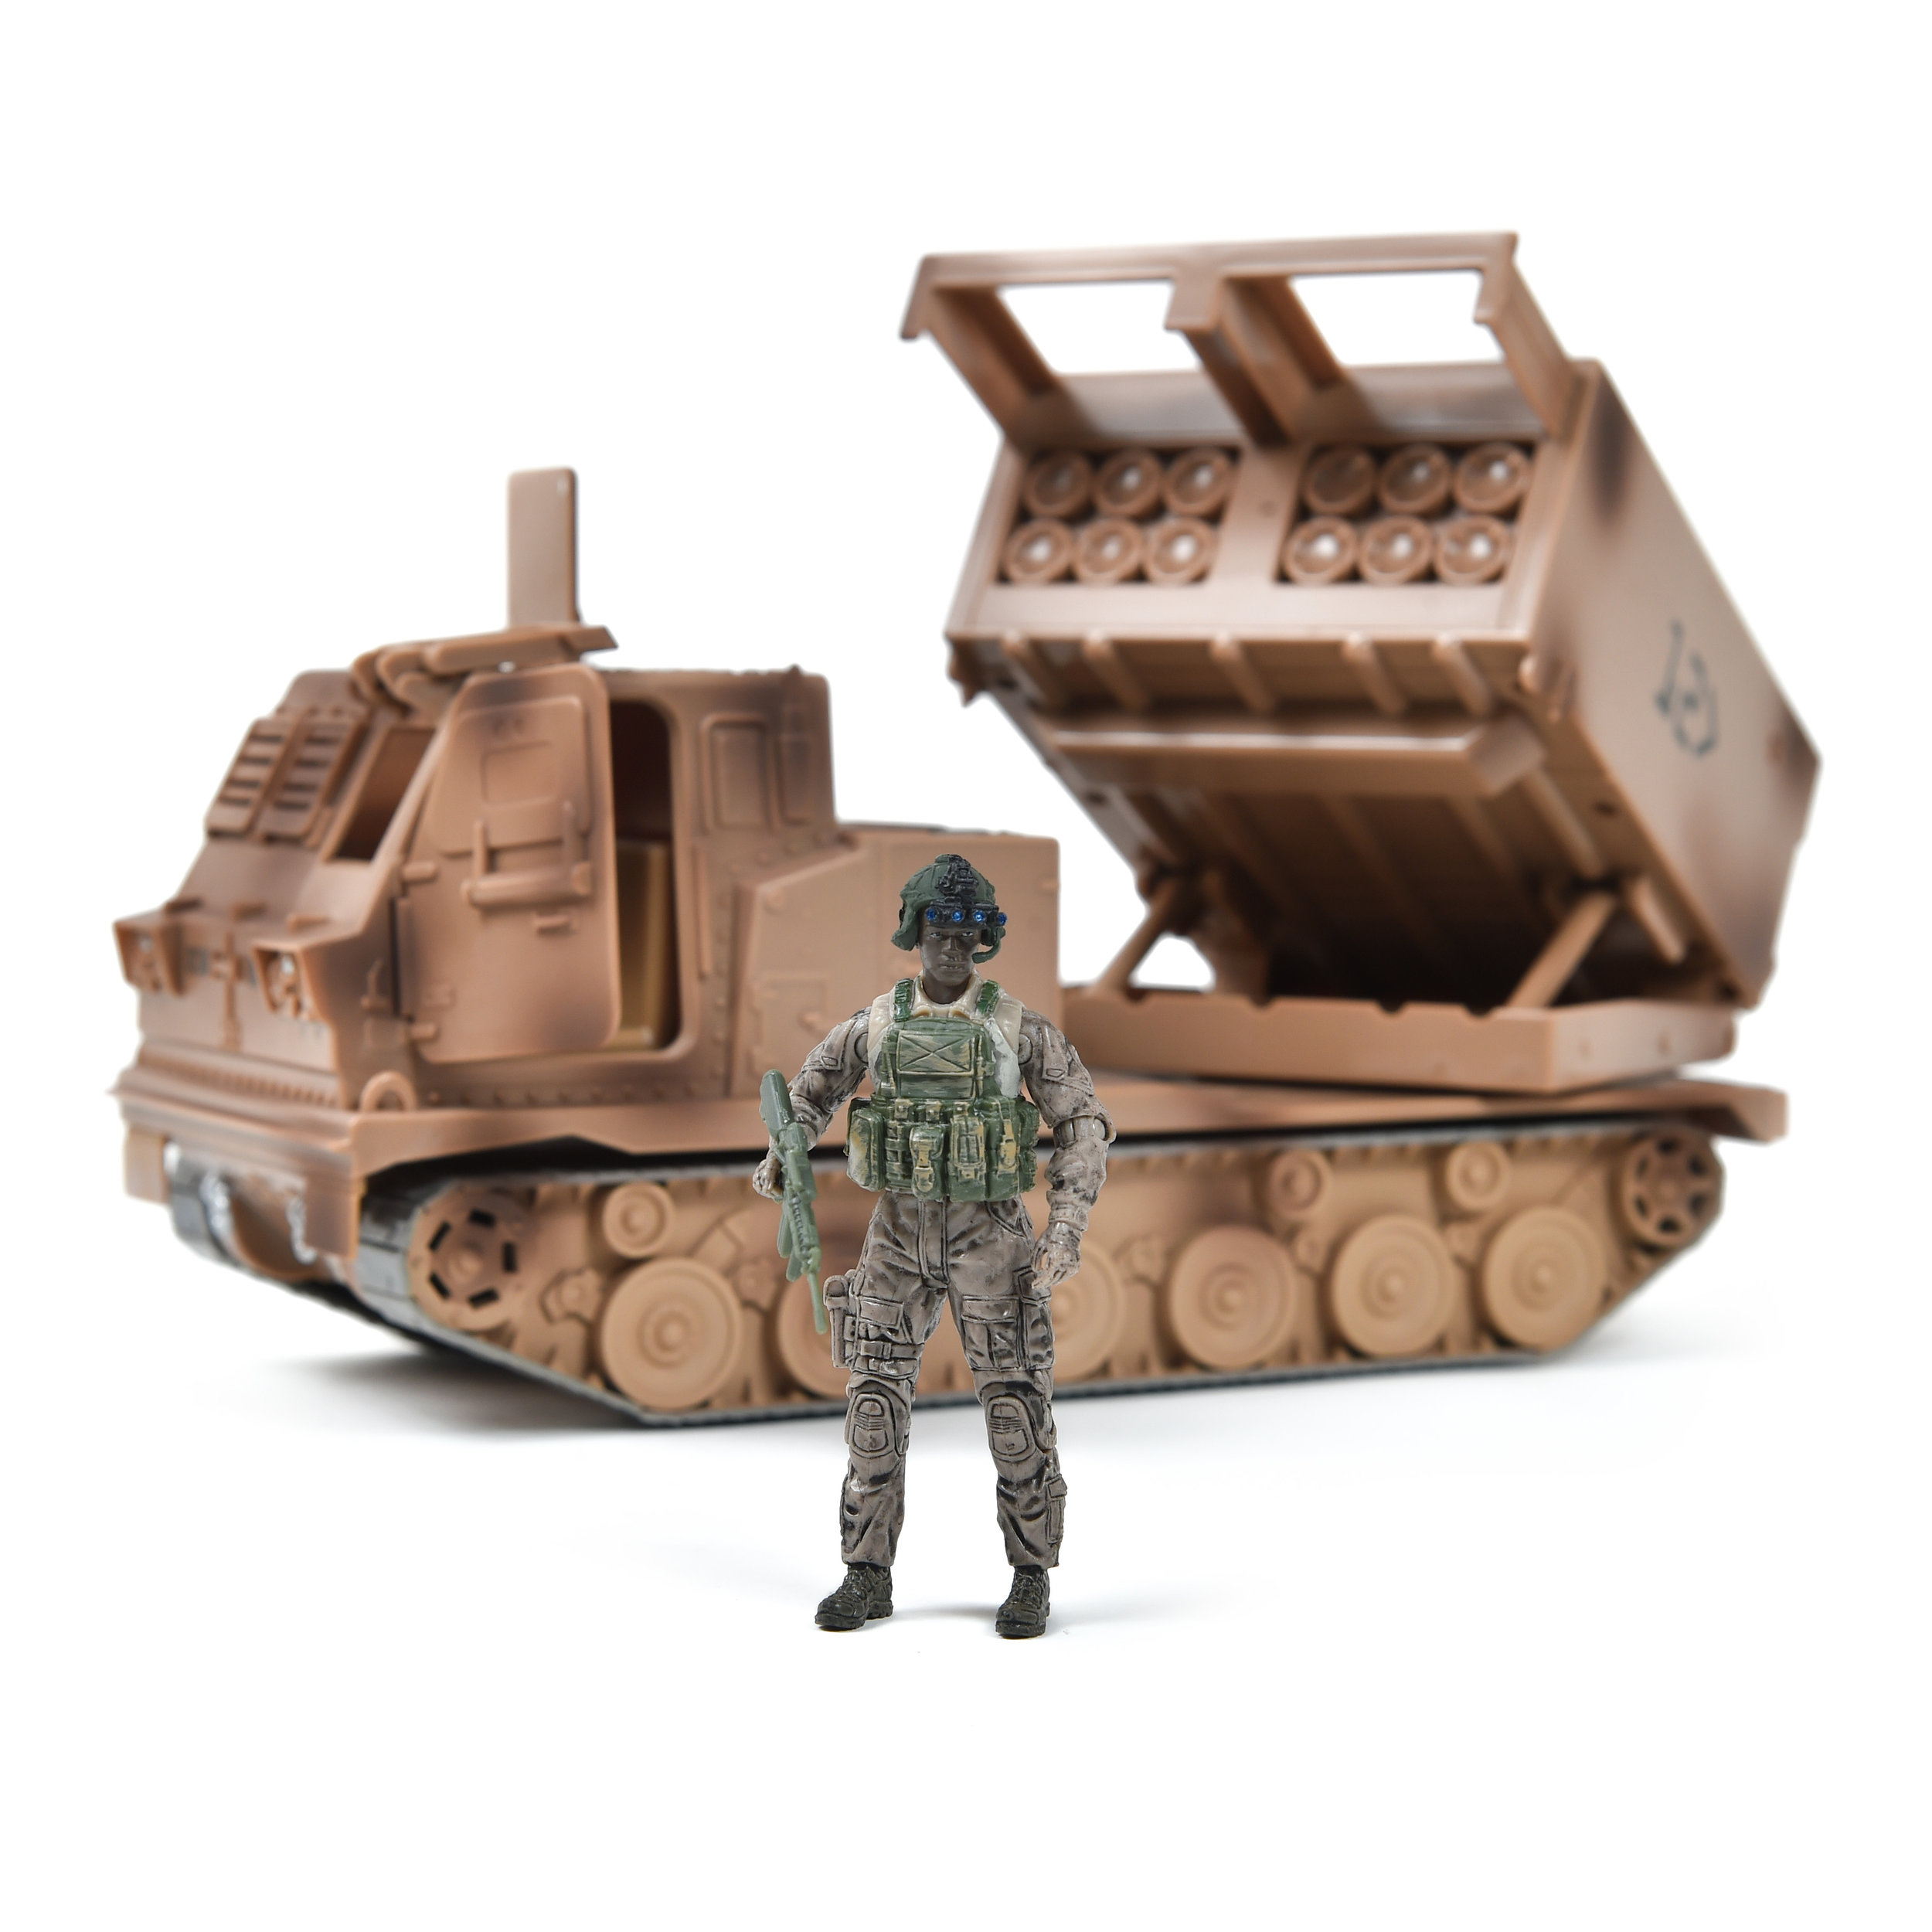 Details about   1/12 Kmart Elite Force Modern Soldier Military 6" Action Figures Toys Set 